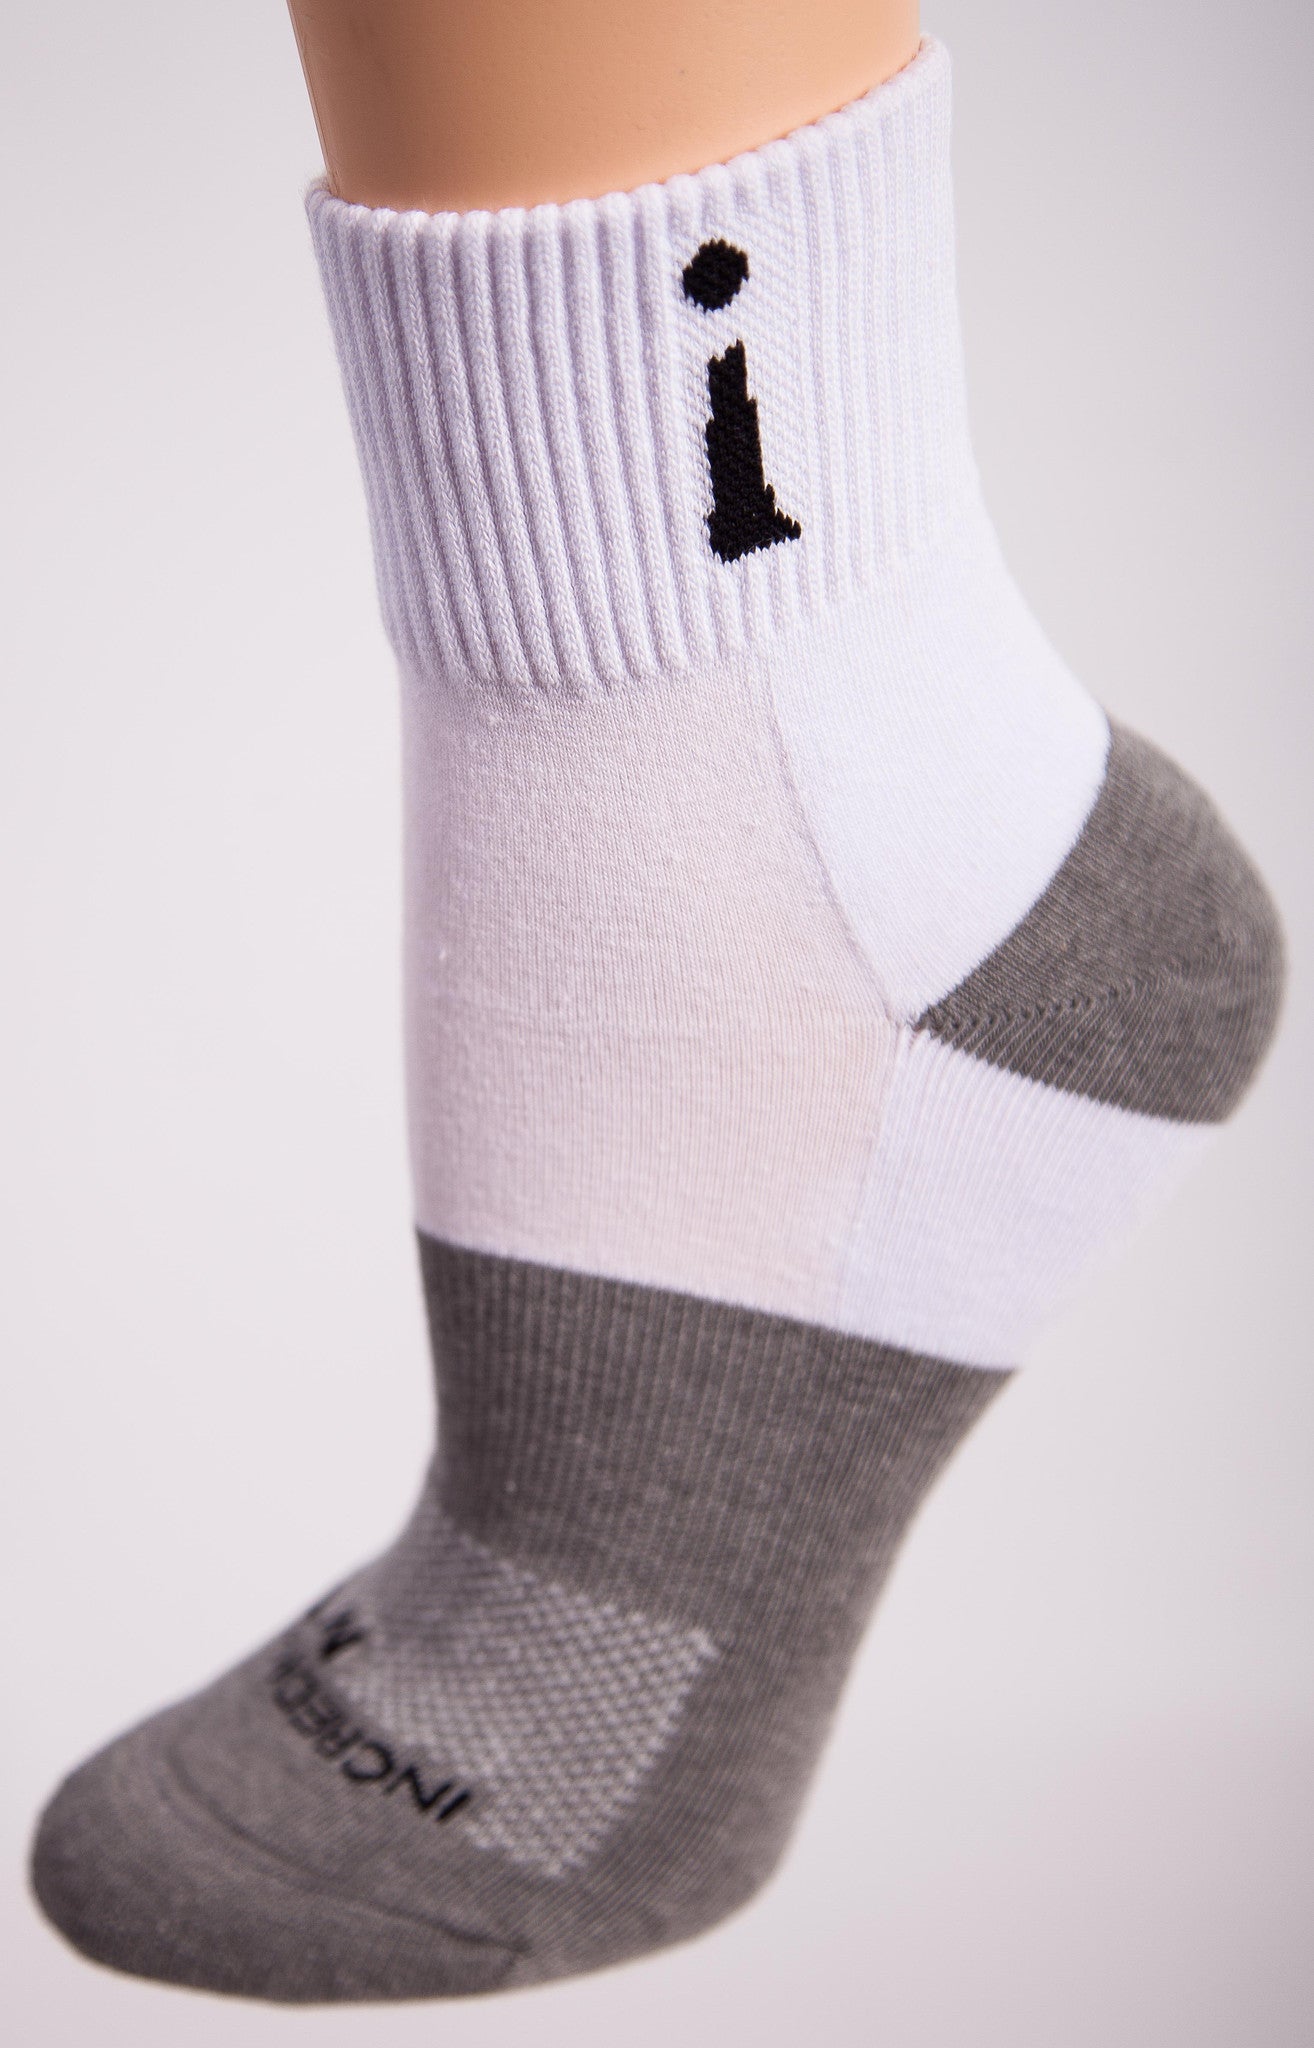 Incrediwear Crew Cut Sport Socks by Incrediwear - Ebambu.ca natural health product store - free shipping <59$ 